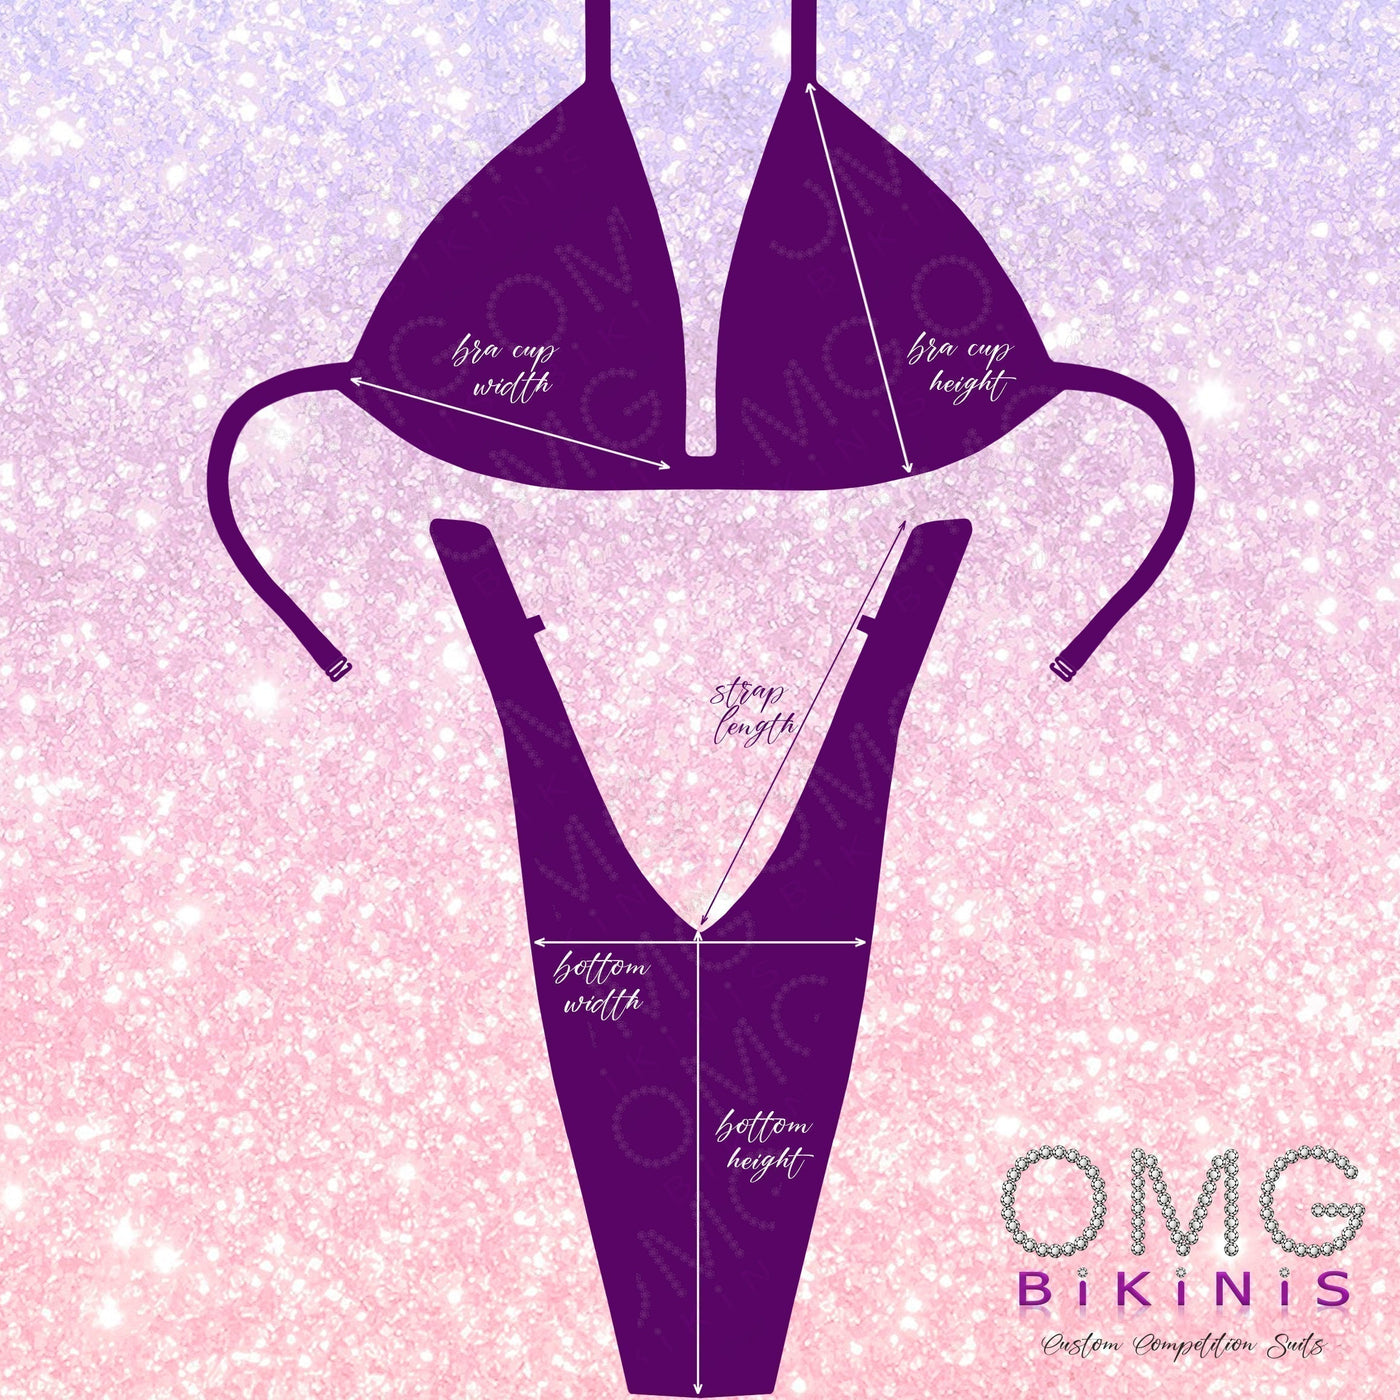 Devon Figure/WPD Competition Suit S/S | OMG Bikinis Rentals